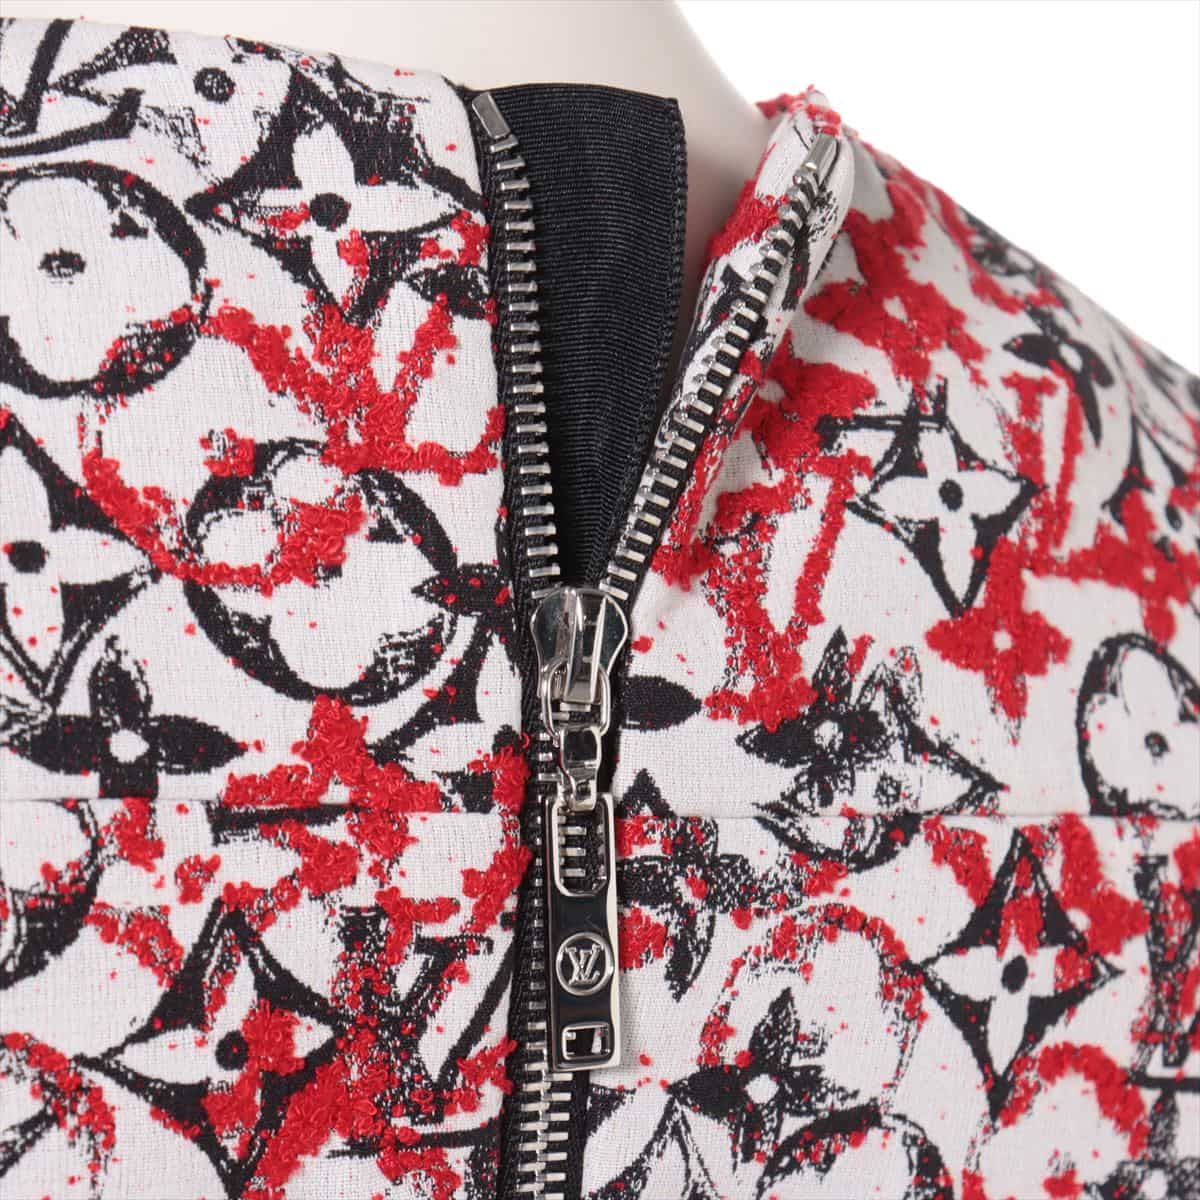 Louis Vuitton Monogram Cotton & rayon Sleeveless dress 34 Ladies' Red